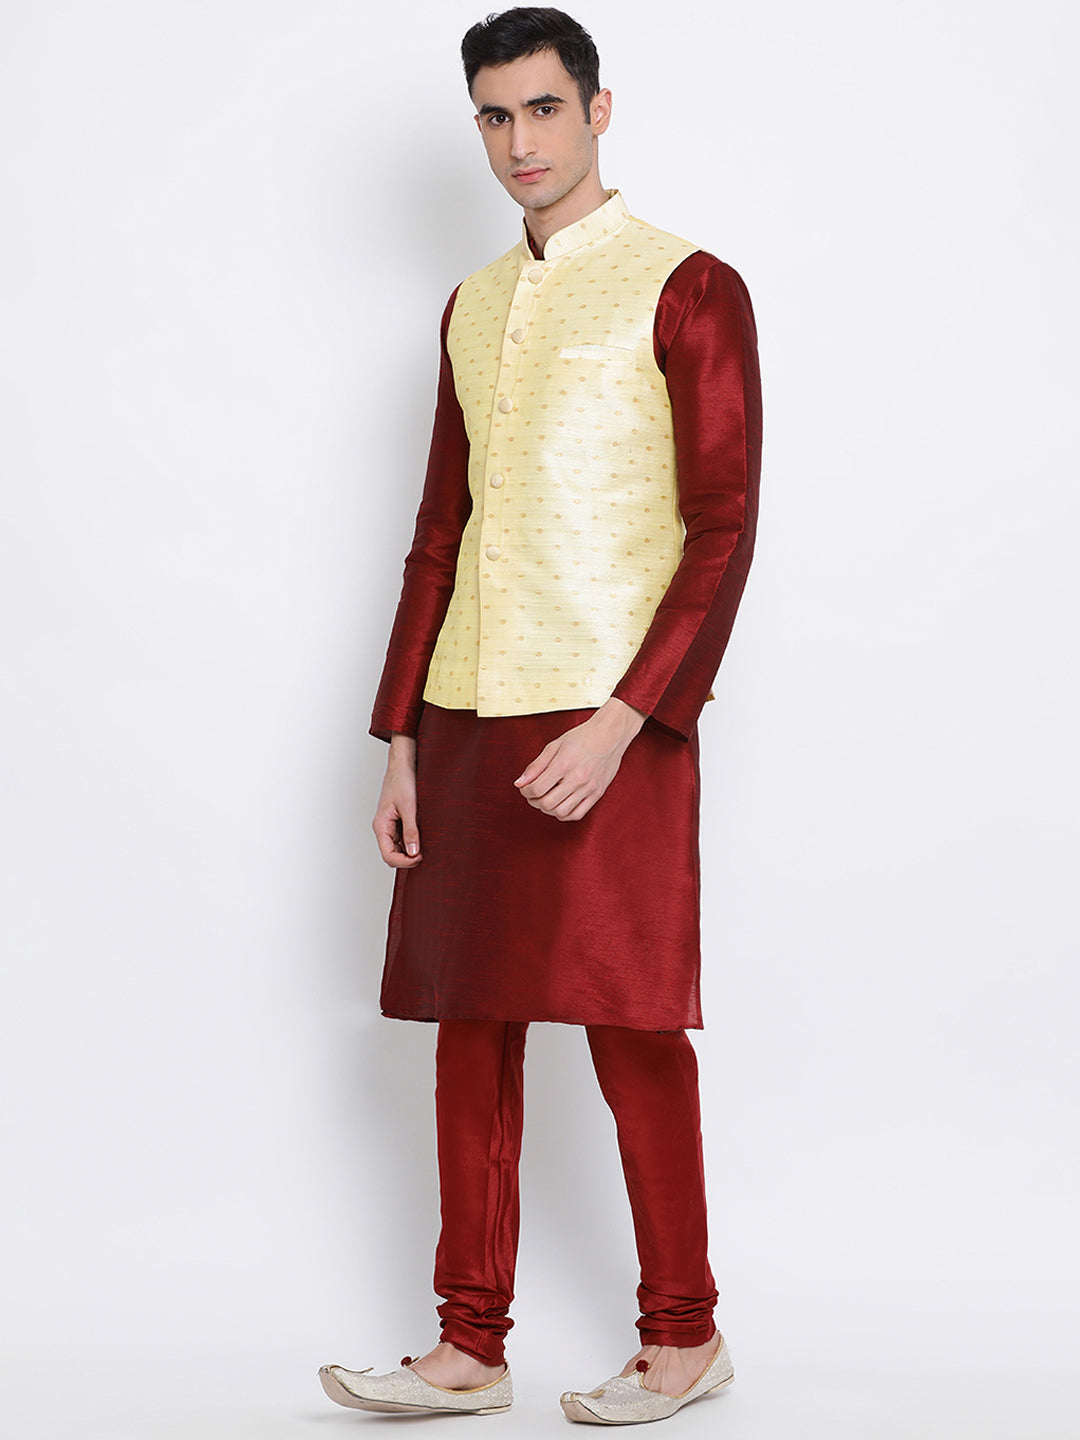 Brocade and Silk Wedding Wear DN-86 Men Kurta Pajama, Dry clean, Size:  32-42 at Rs 845/set in Delhi